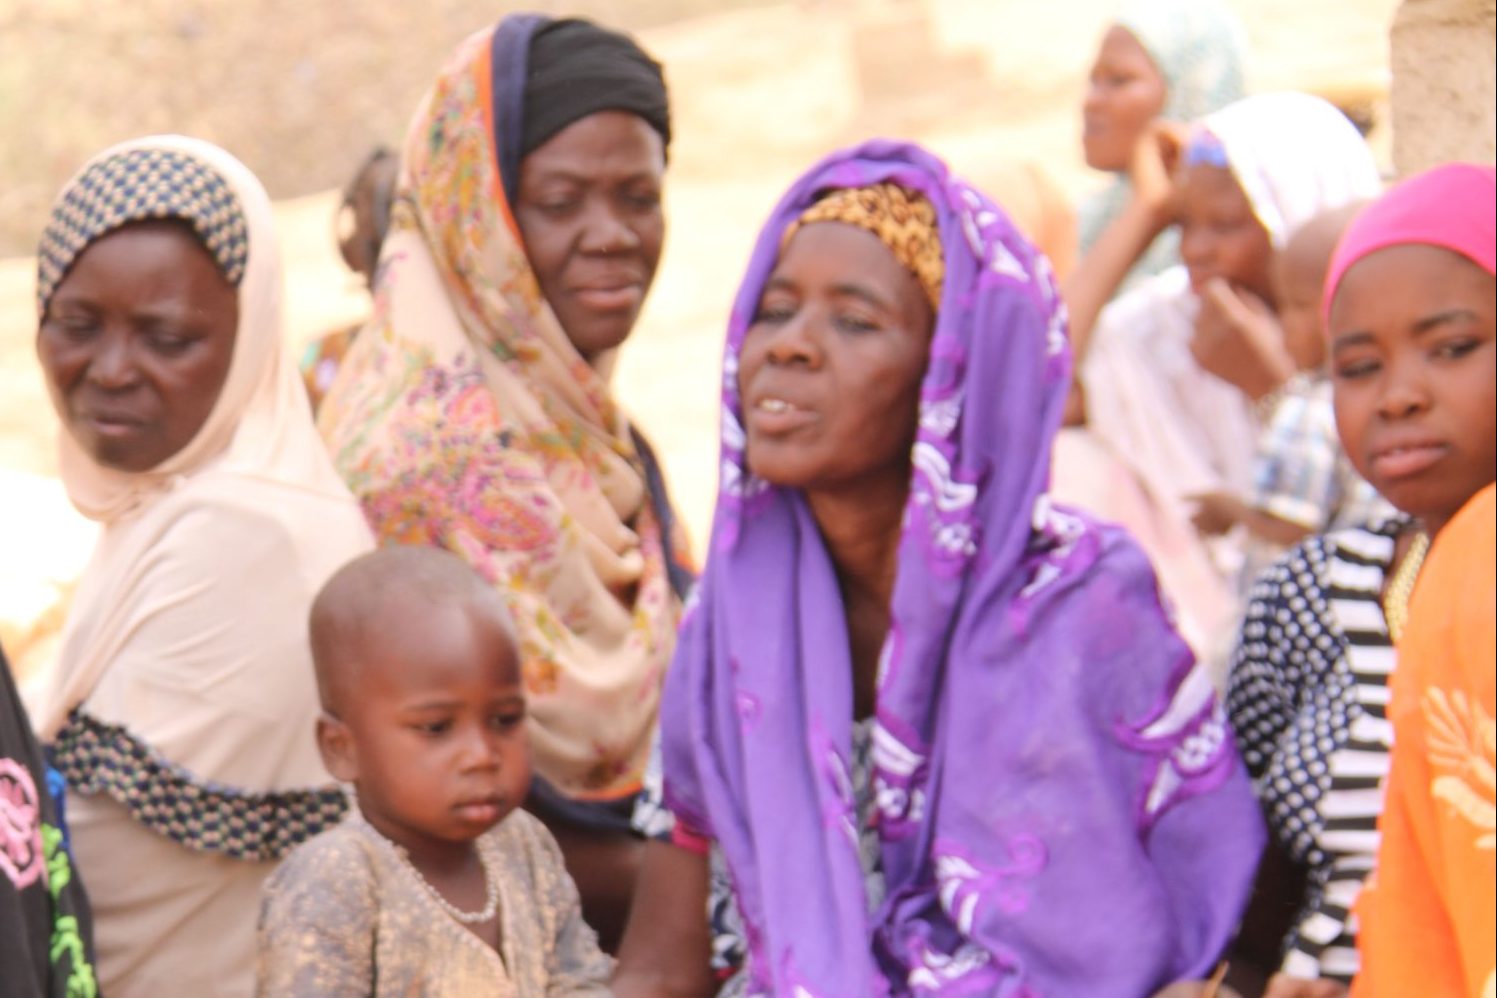 Christian and Muslim Women in a displacement camp near the capital Ouagadougou.